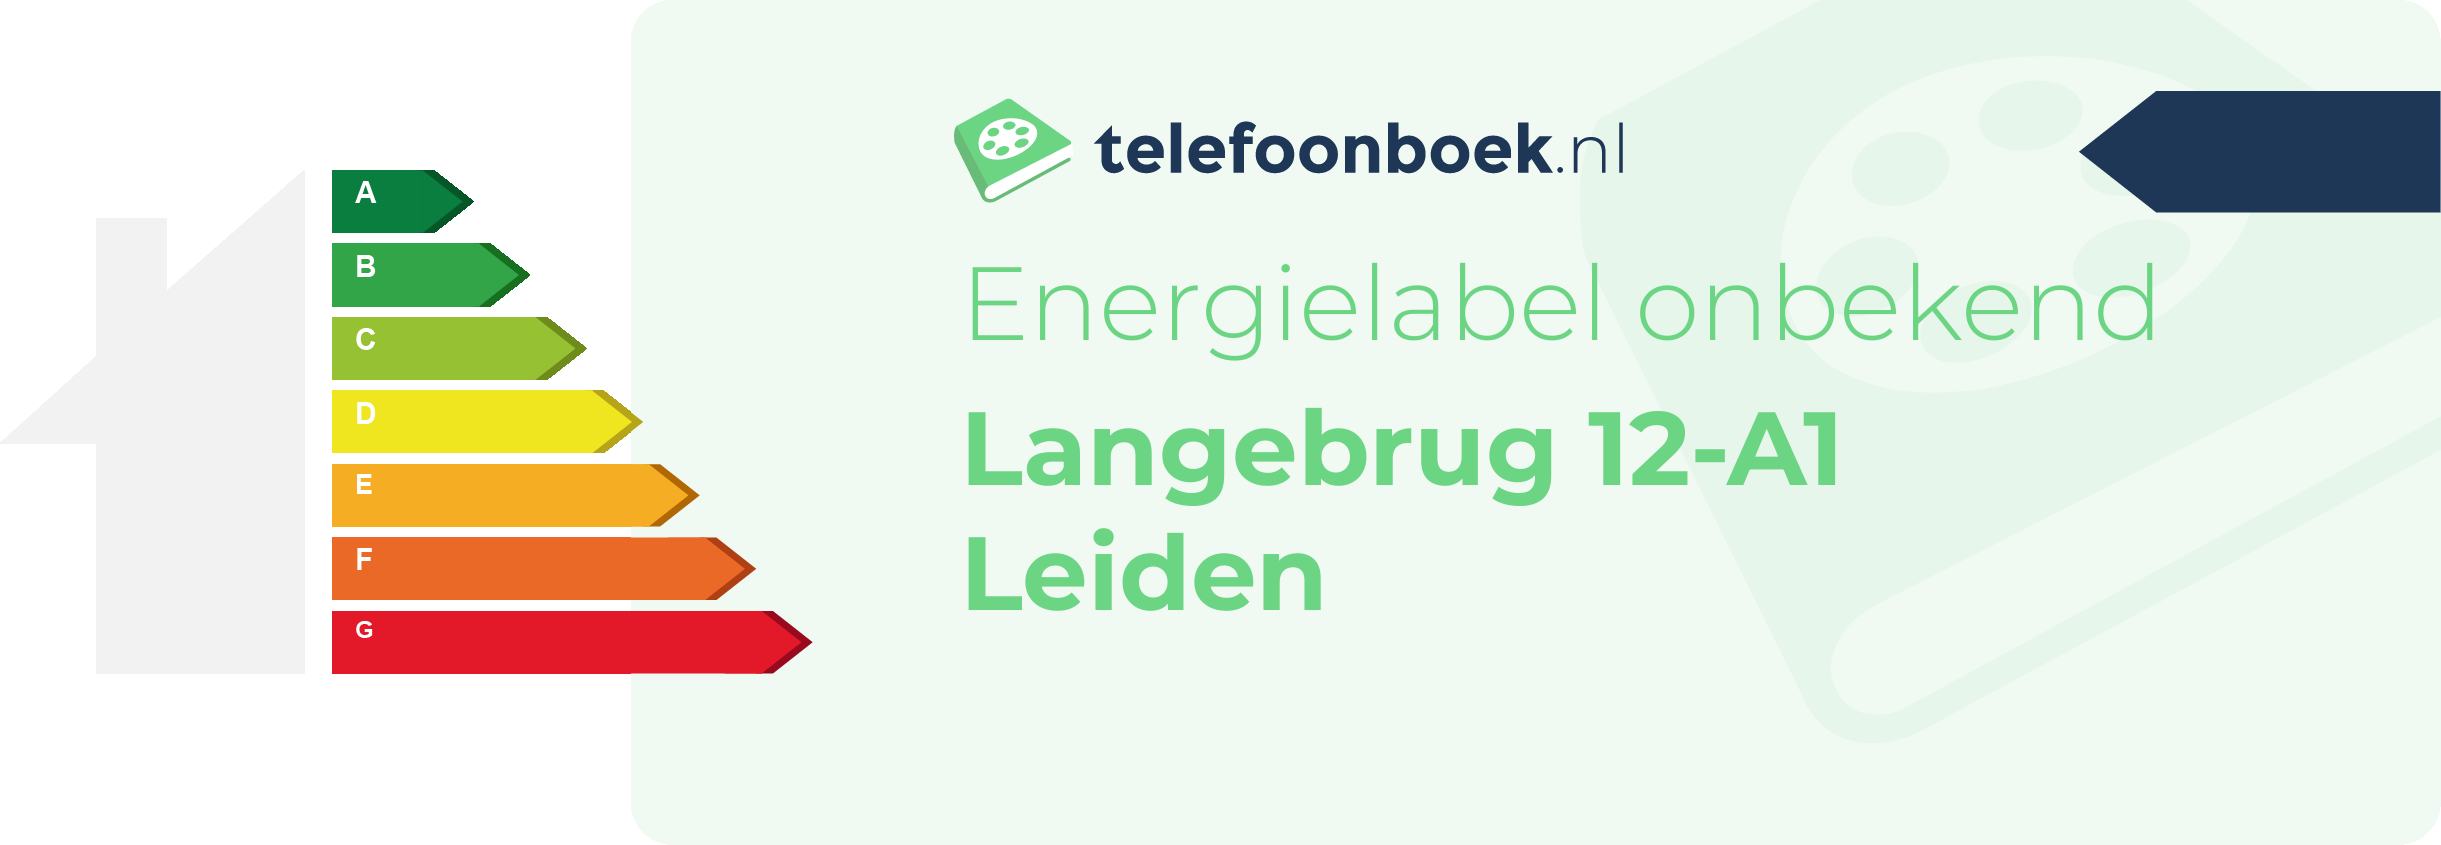 Energielabel Langebrug 12-A1 Leiden